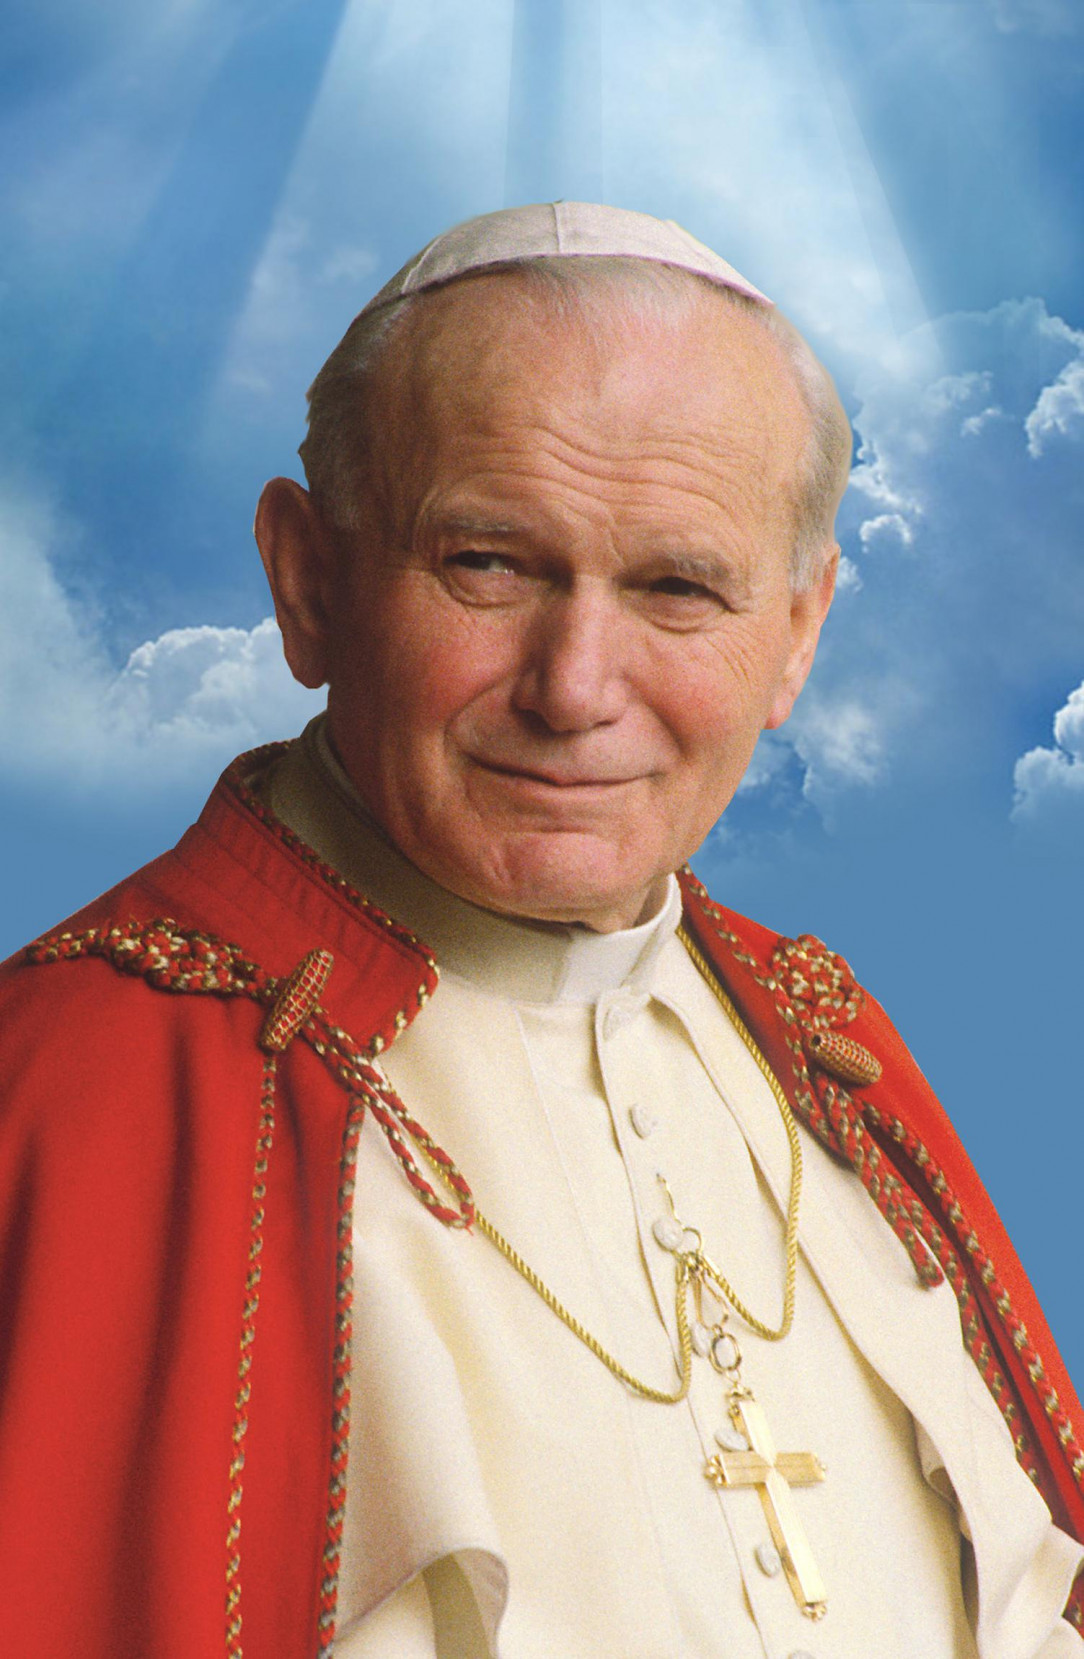 Saint John Paul II, pray for us